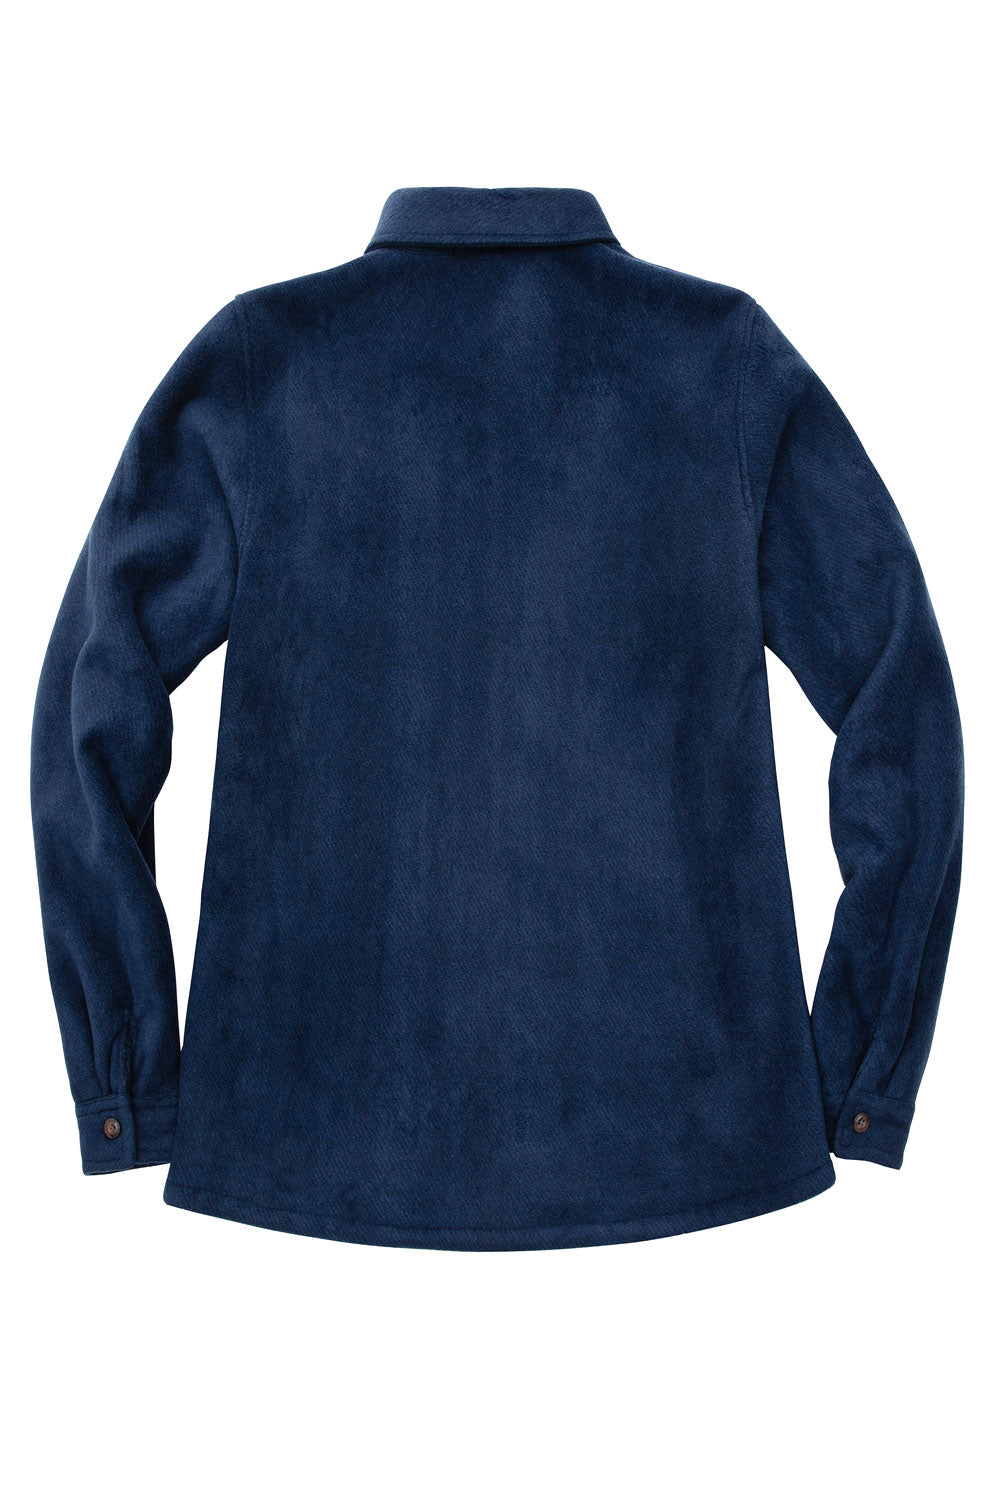 Women's Sherpa Lined Warm Shirt Jacket Button Up Winter Fleece Shirt